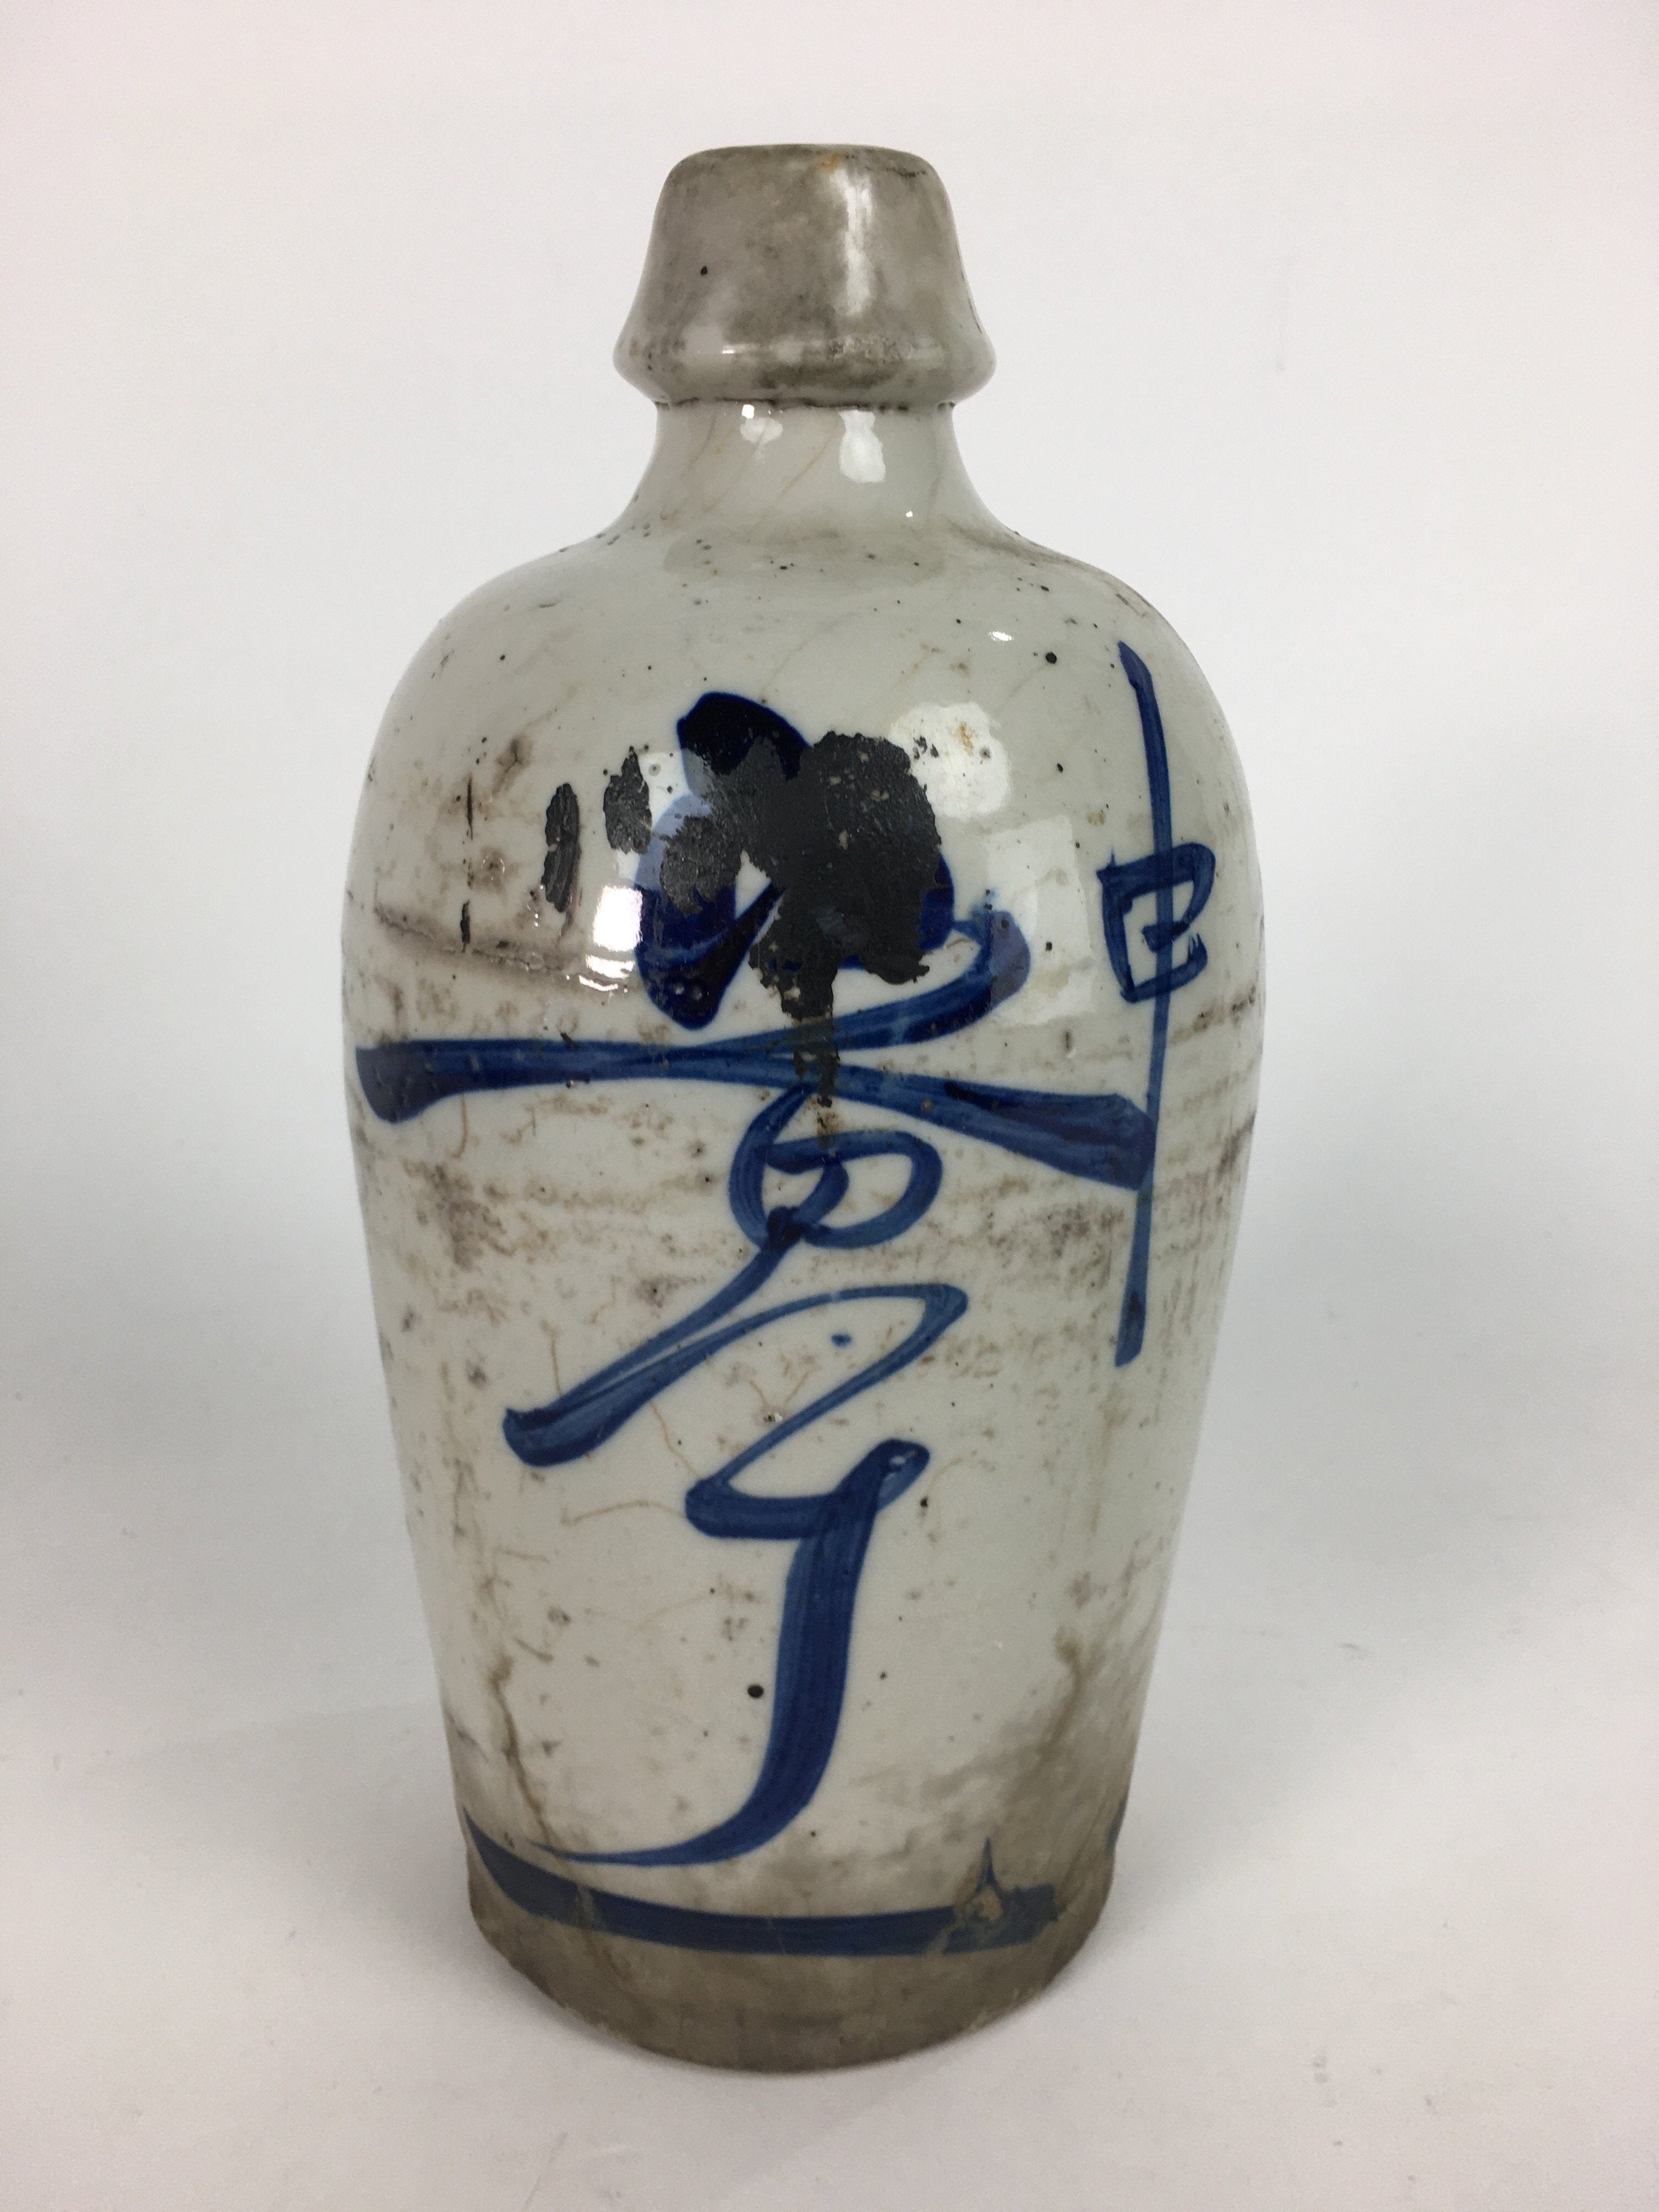 Japanese Ceramic Sake Bottle Vtg Kayoi Tokkuri Hand-Written Kanji TS290